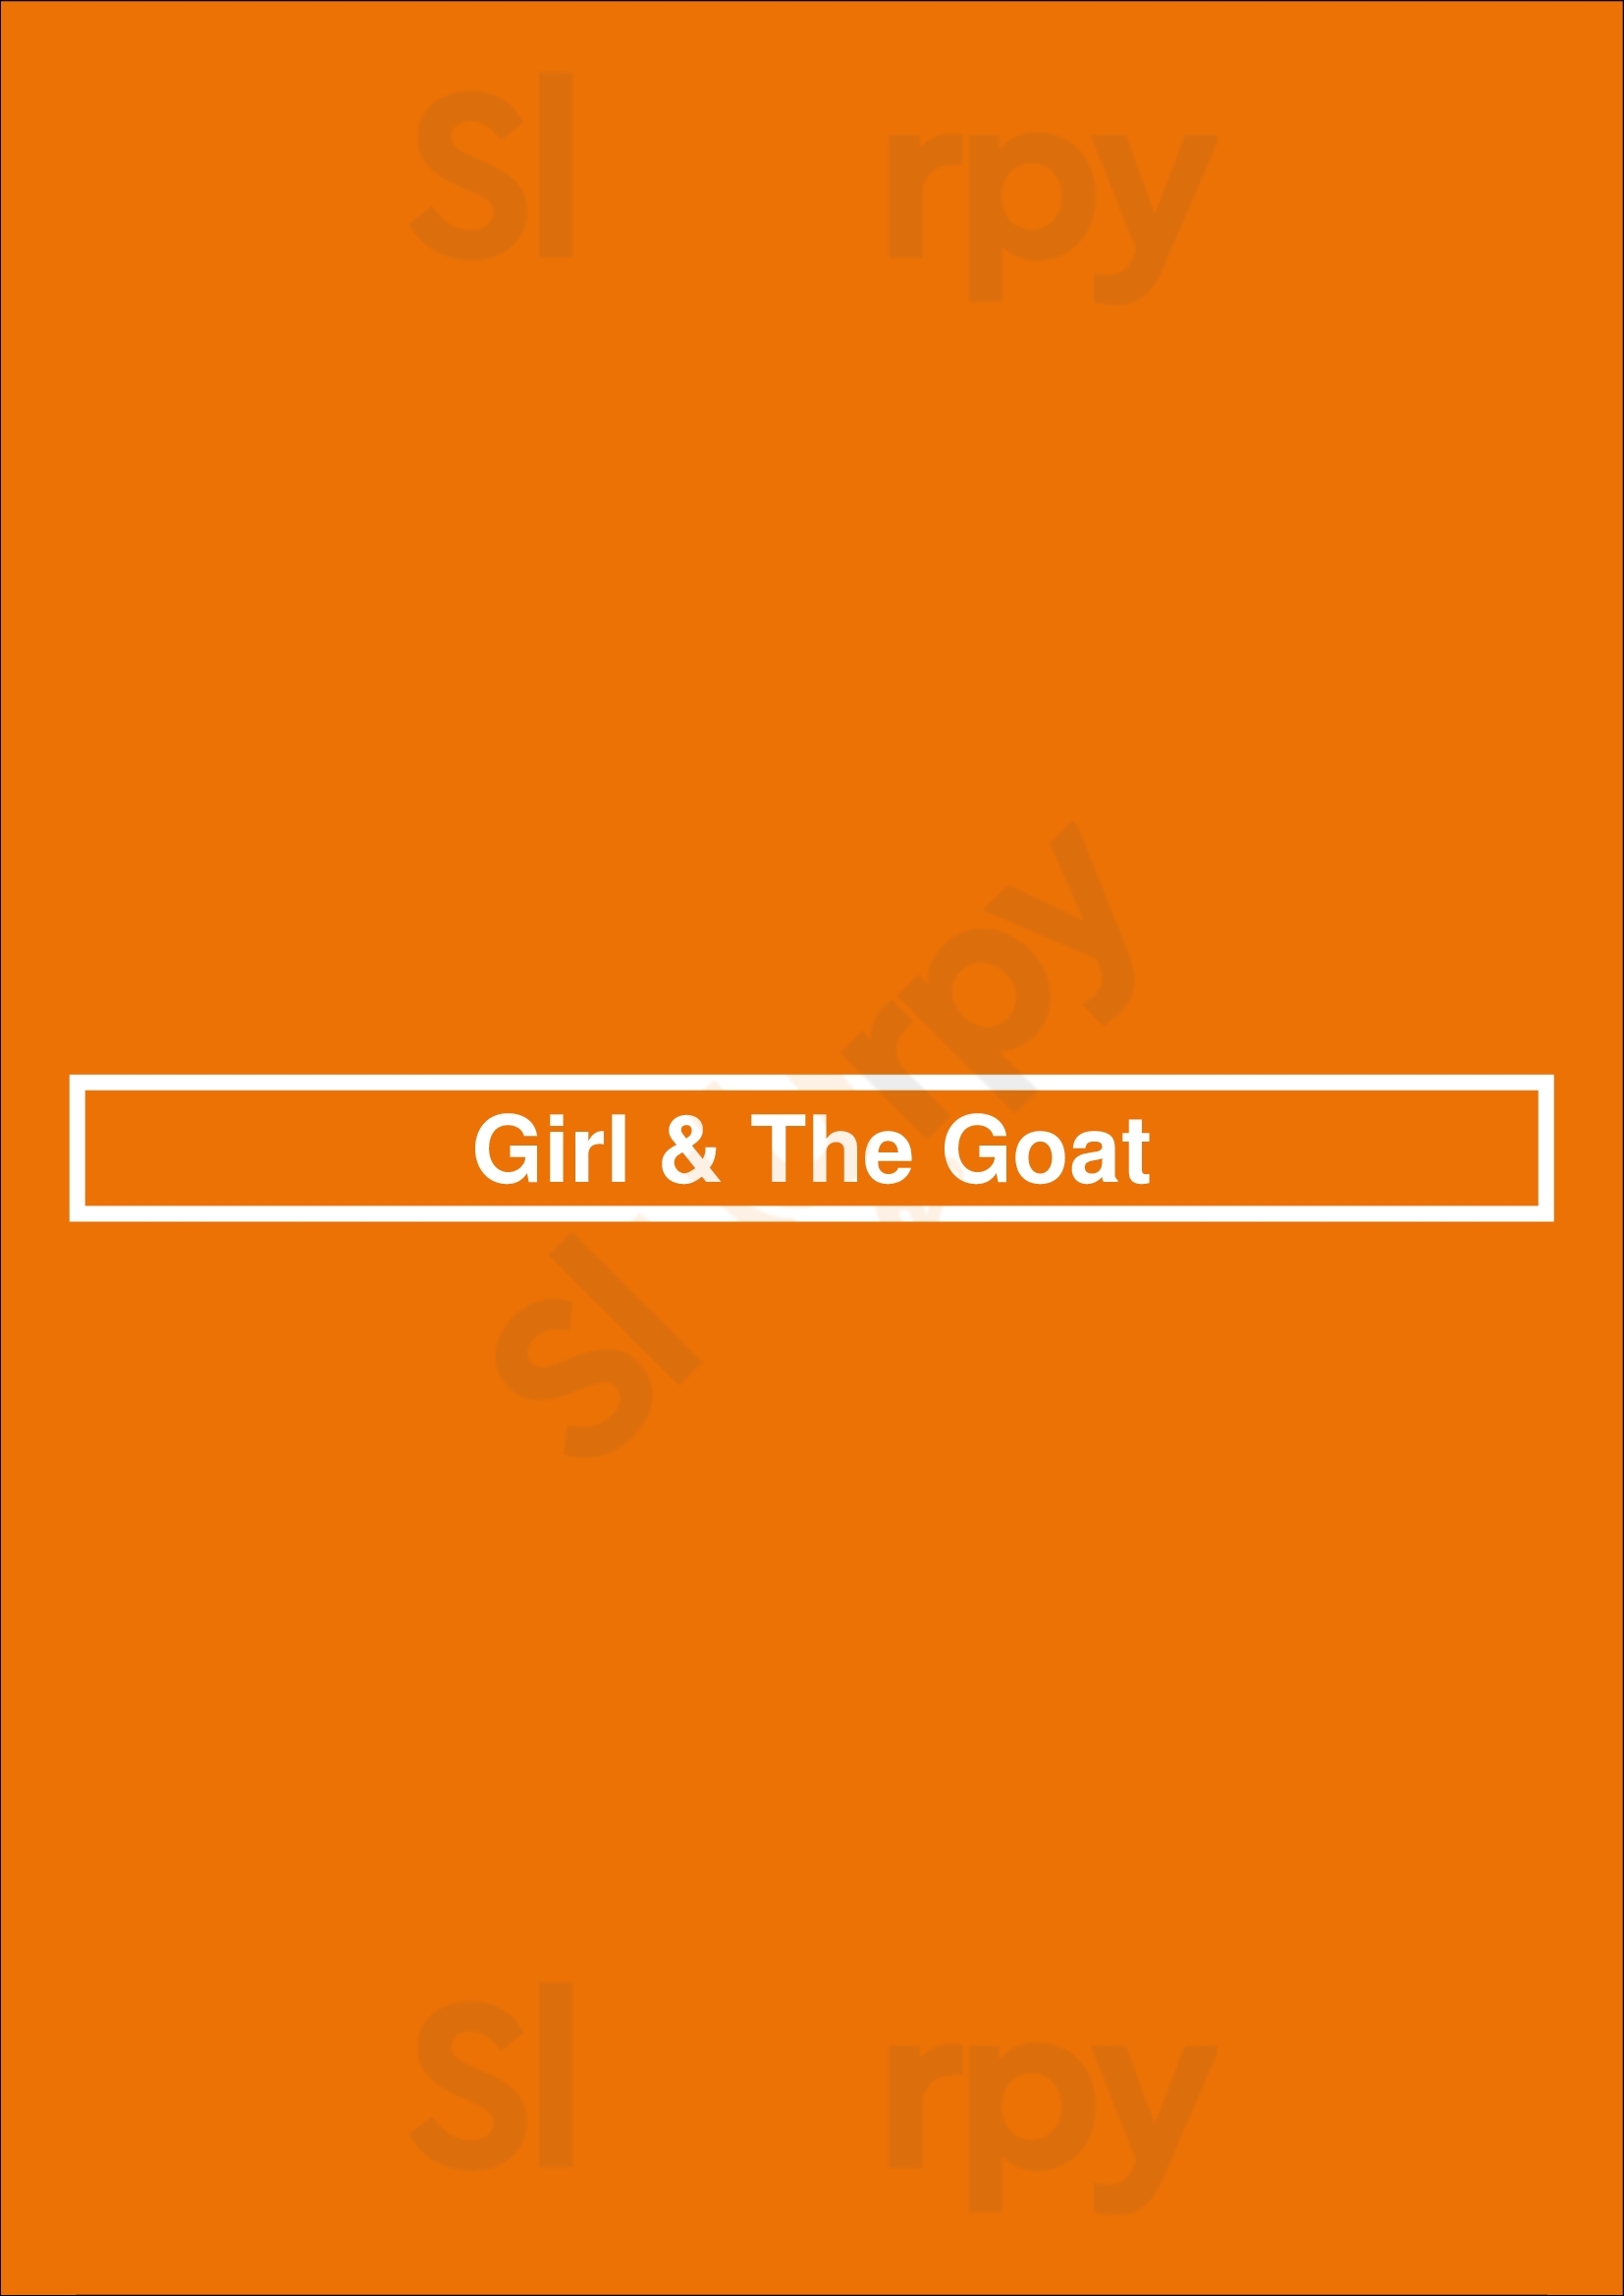 Girl & The Goat Chicago Menu - 1